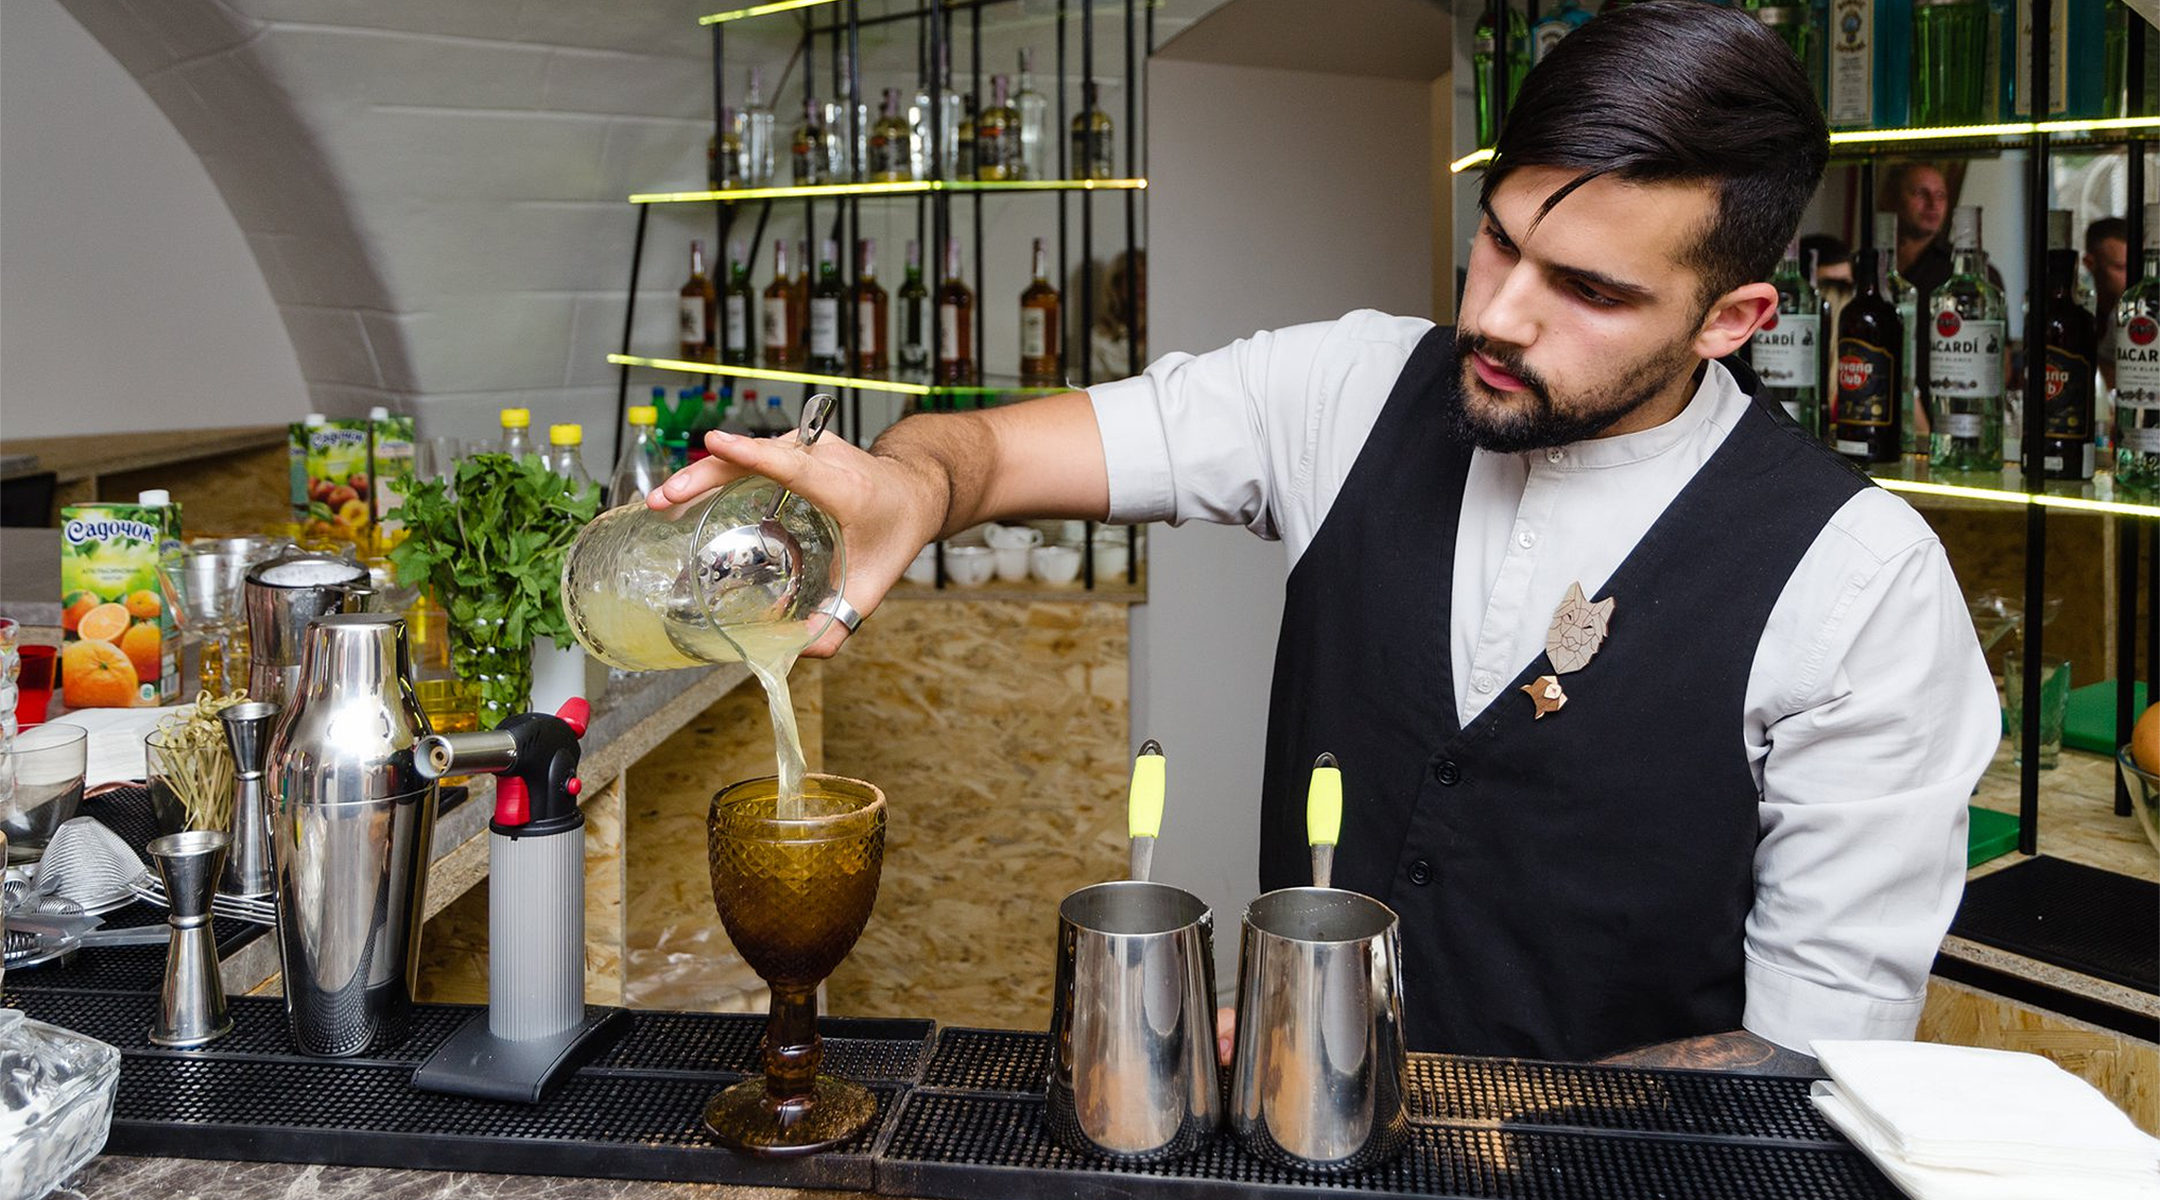 A barman preparing a cocktail at Kosher Bar in Odessa, Ukraine on Sept. 25, 2019. (Courtesy of Kosher Bar)